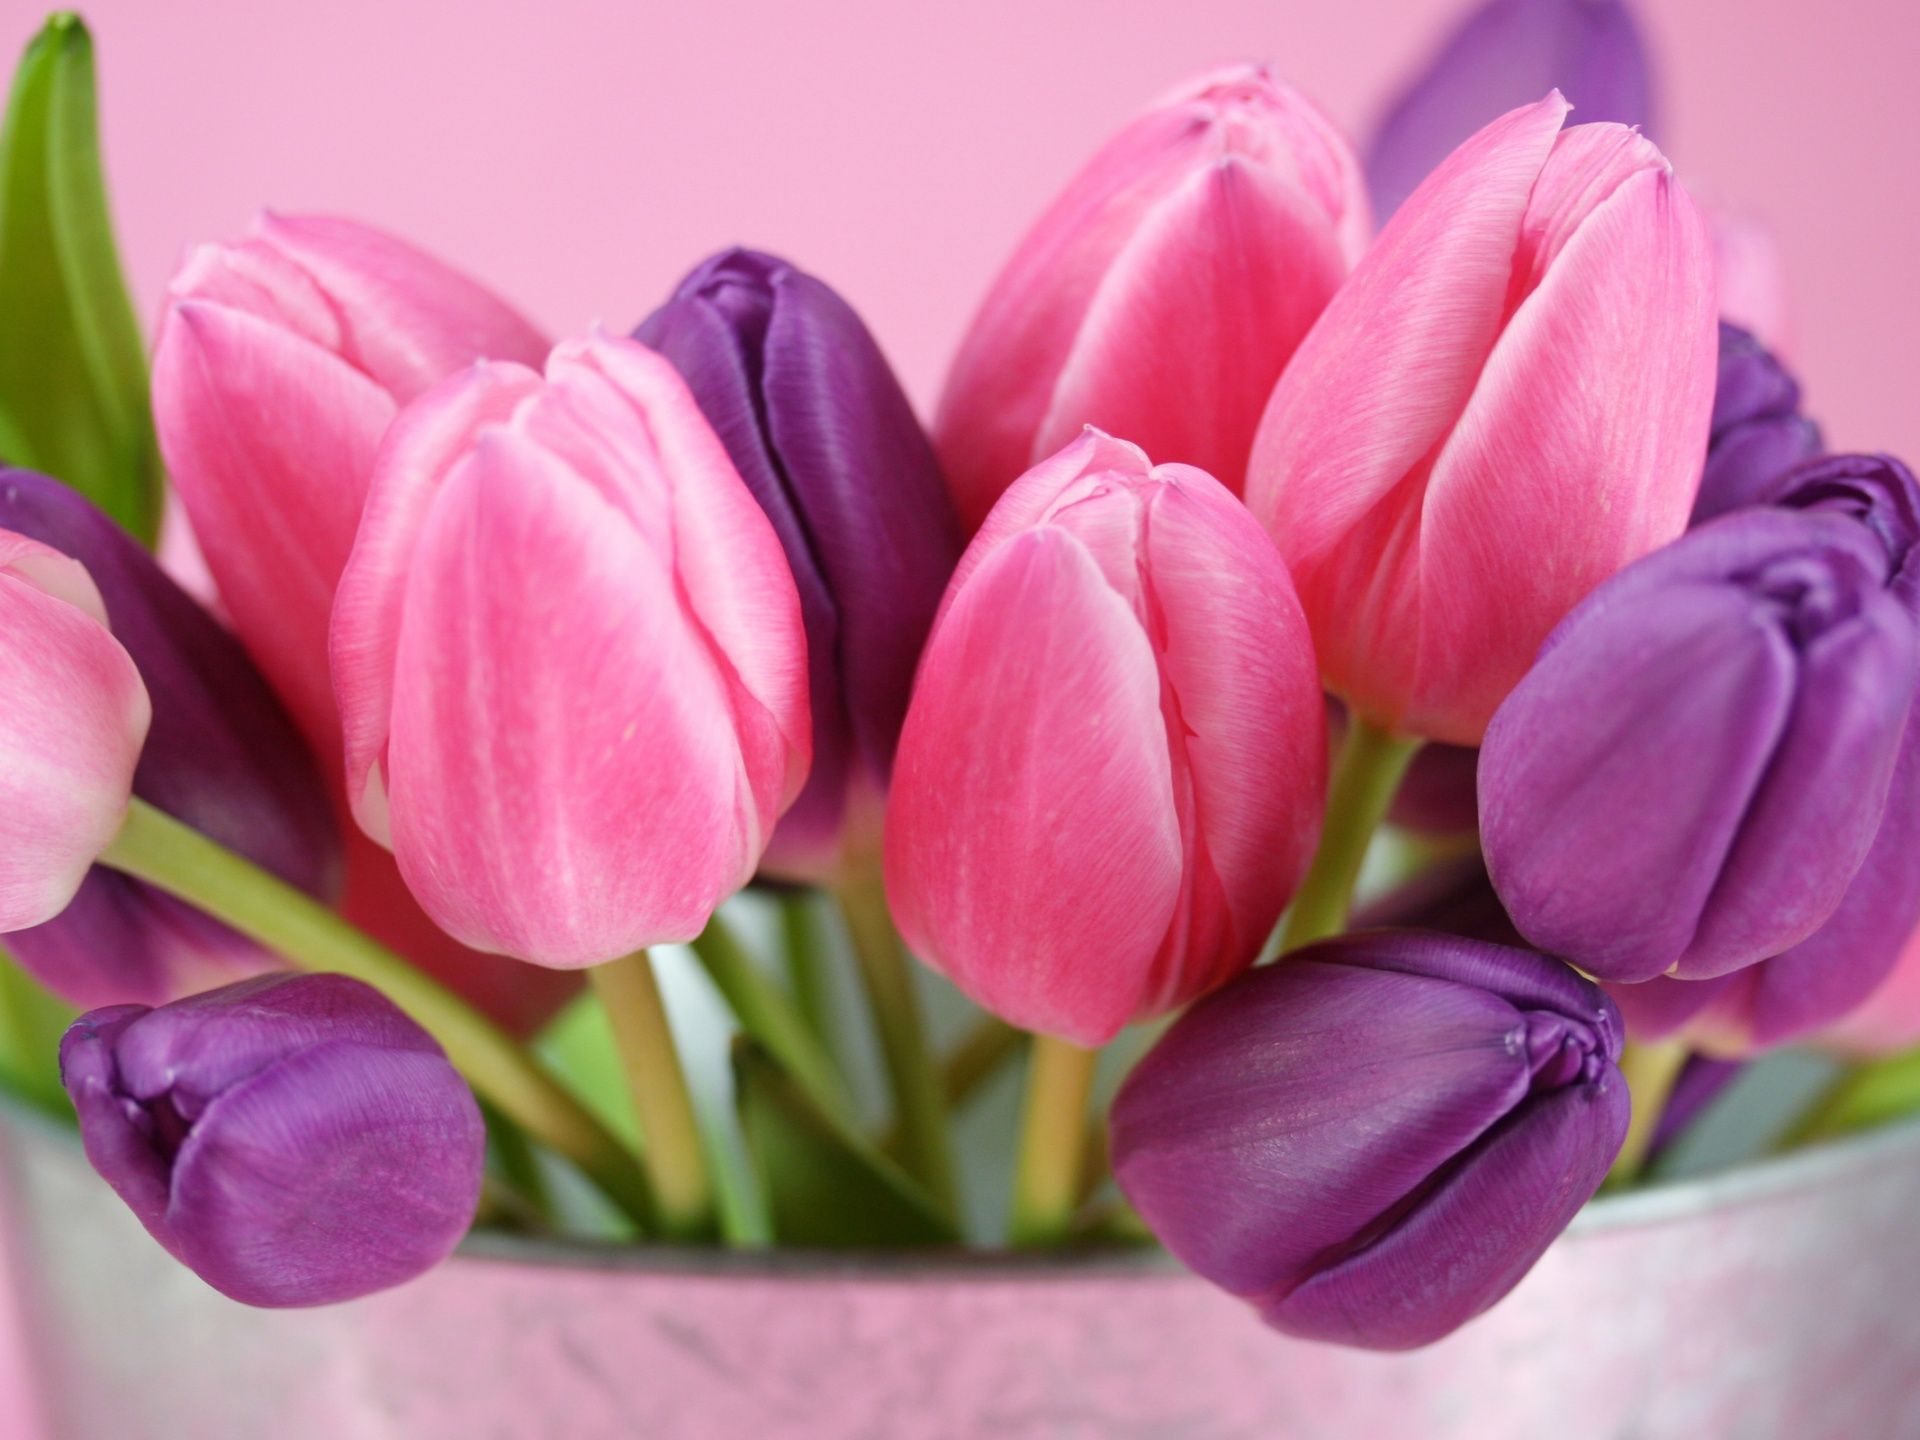 Dark Purple and Pink Tulips Flower Arrangements HD Picture | pink ...